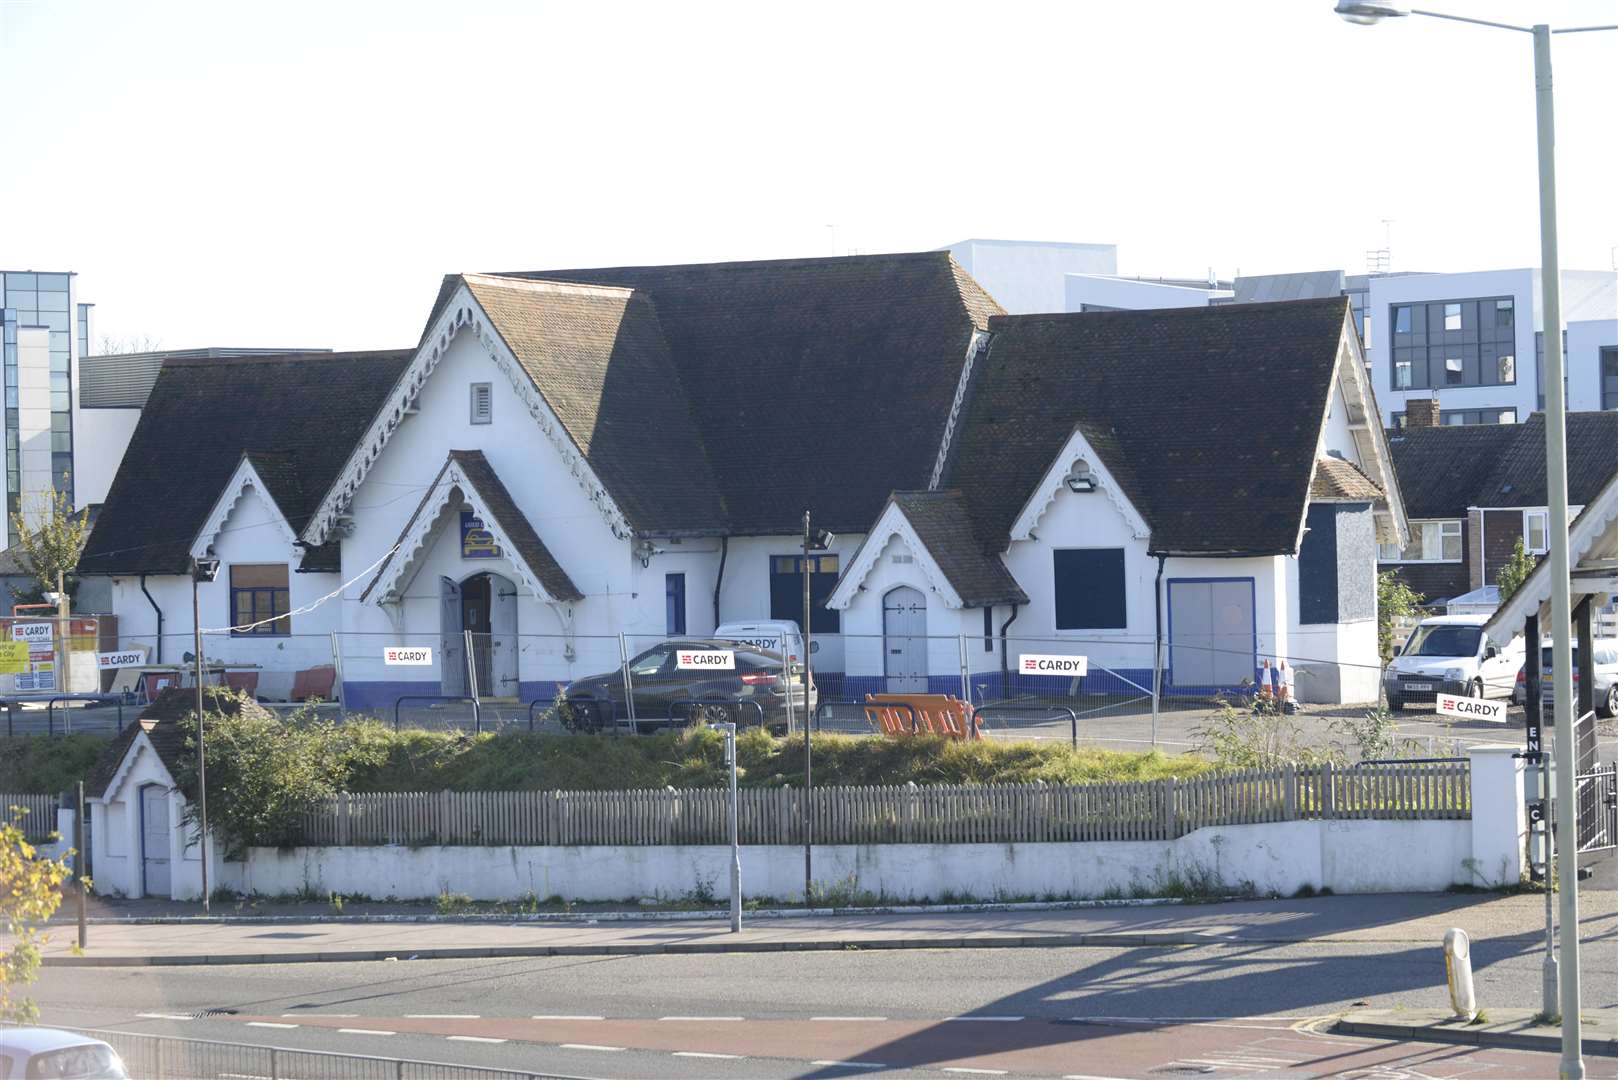 The former St Mary Bredin School